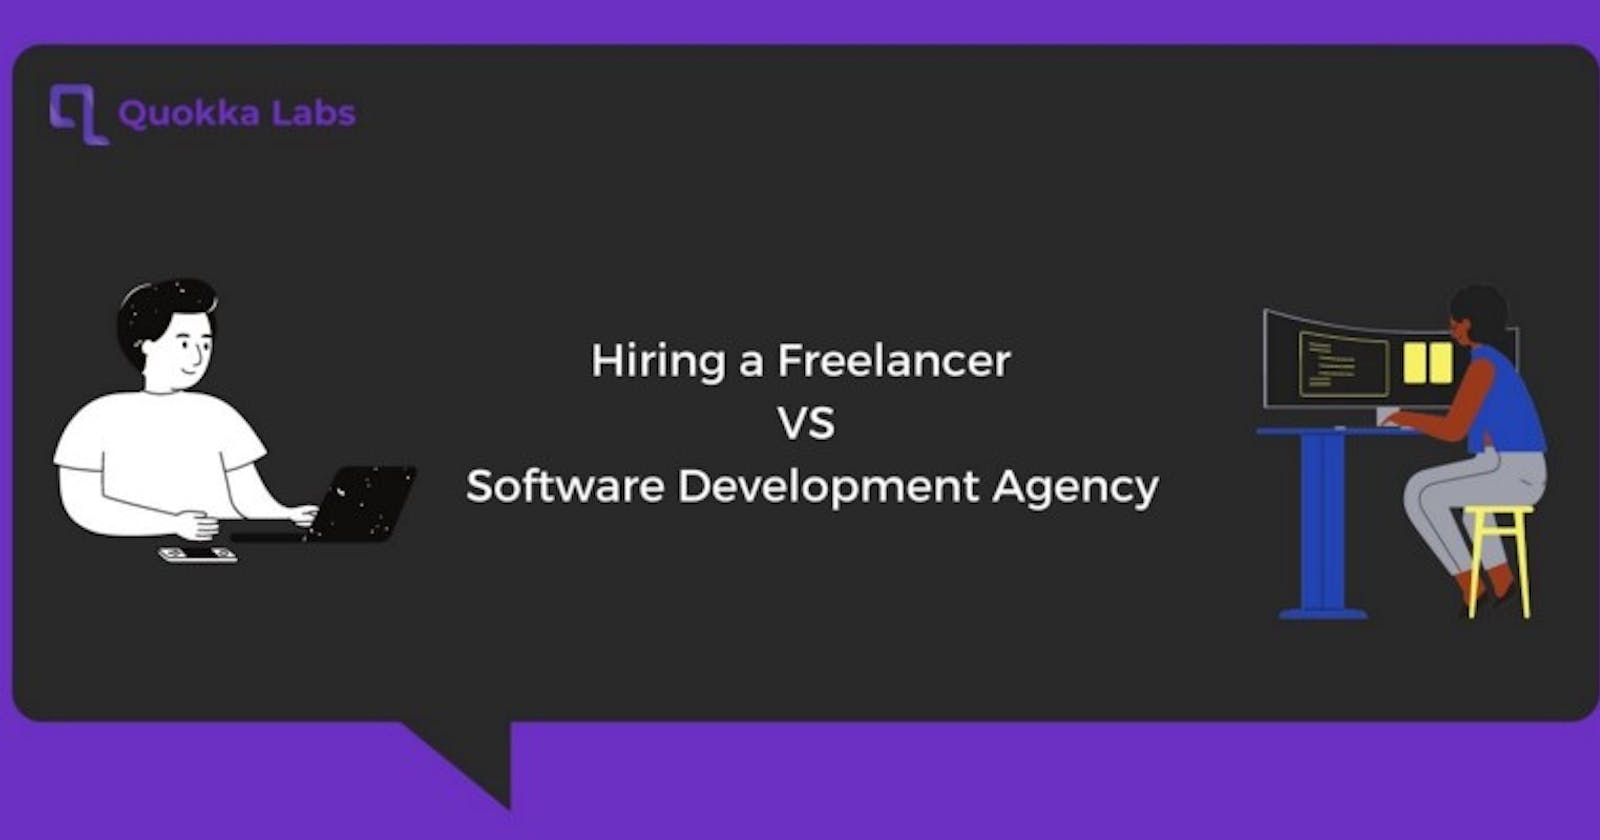 Hiring a Software Development Agency VS a Freelancer